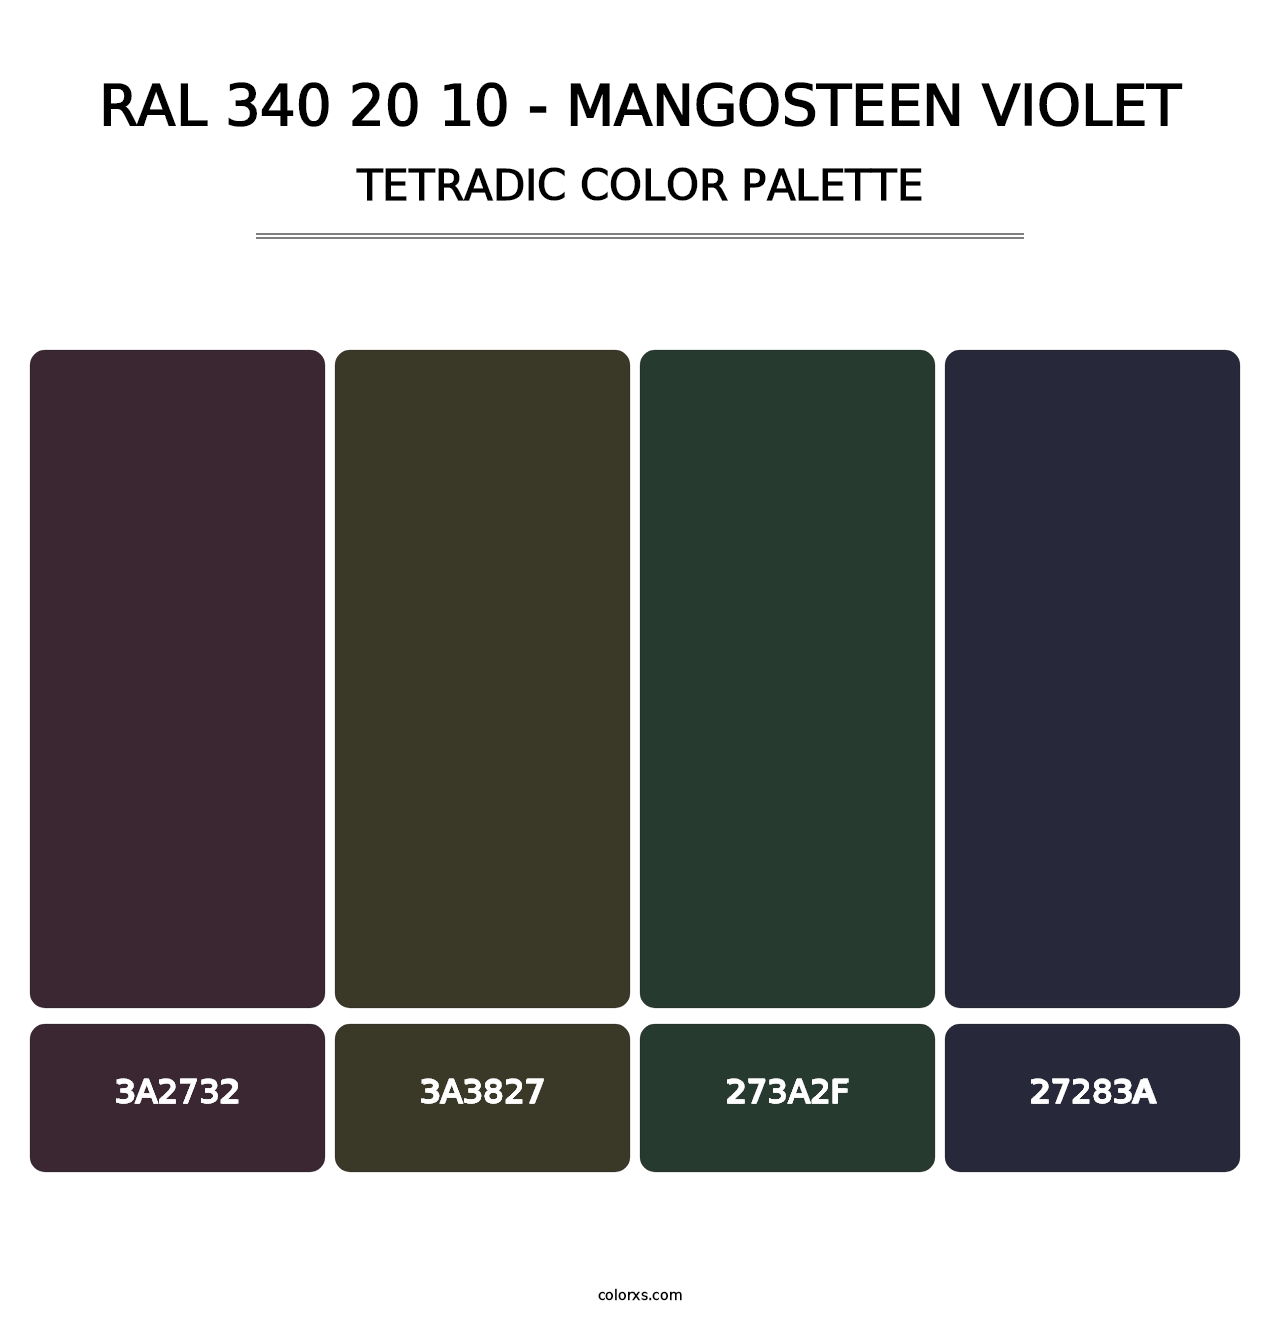 RAL 340 20 10 - Mangosteen Violet - Tetradic Color Palette